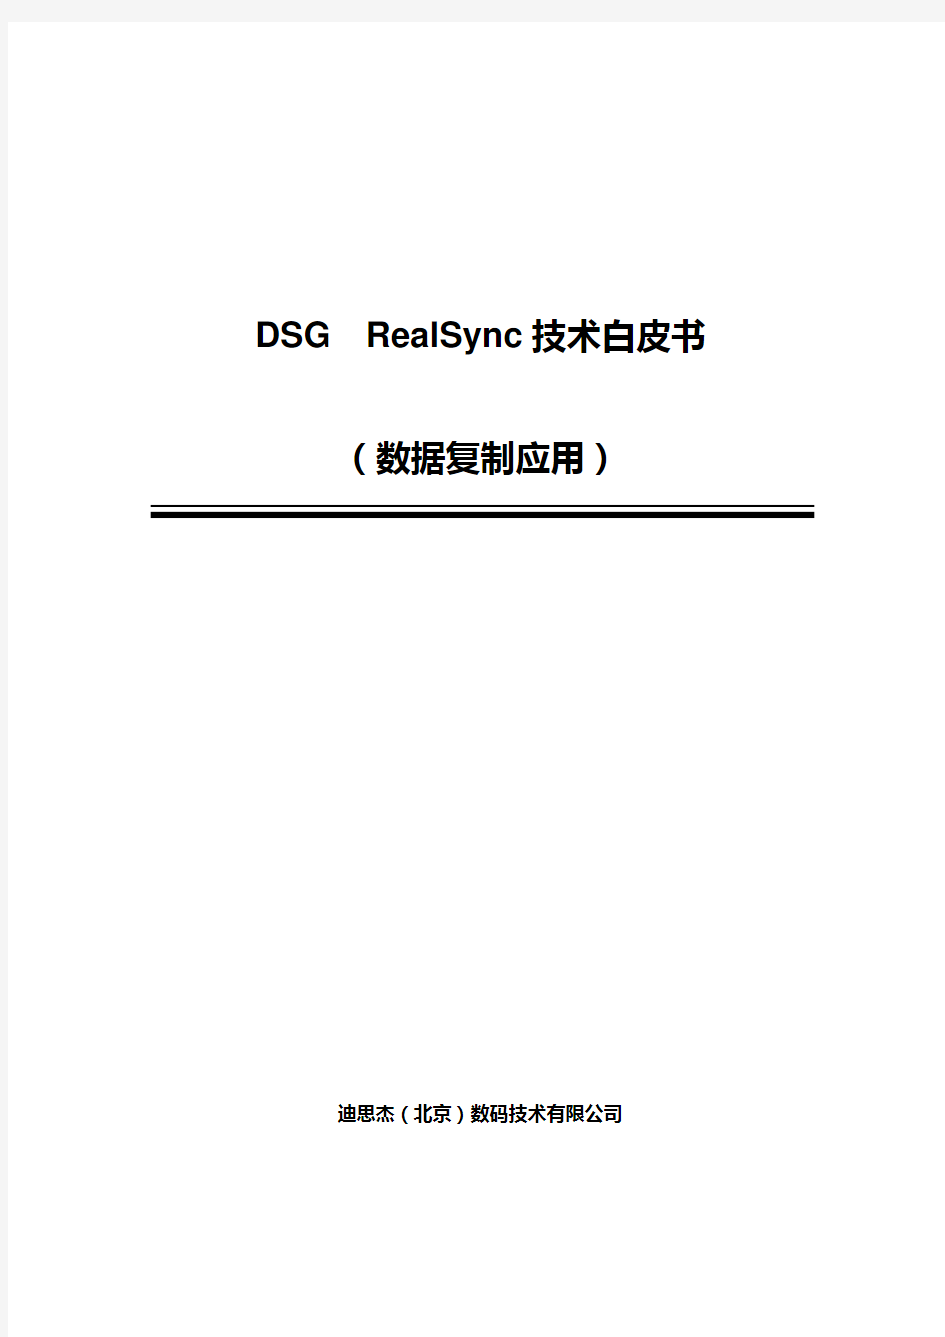 DSG RealSync技术白皮书-v3